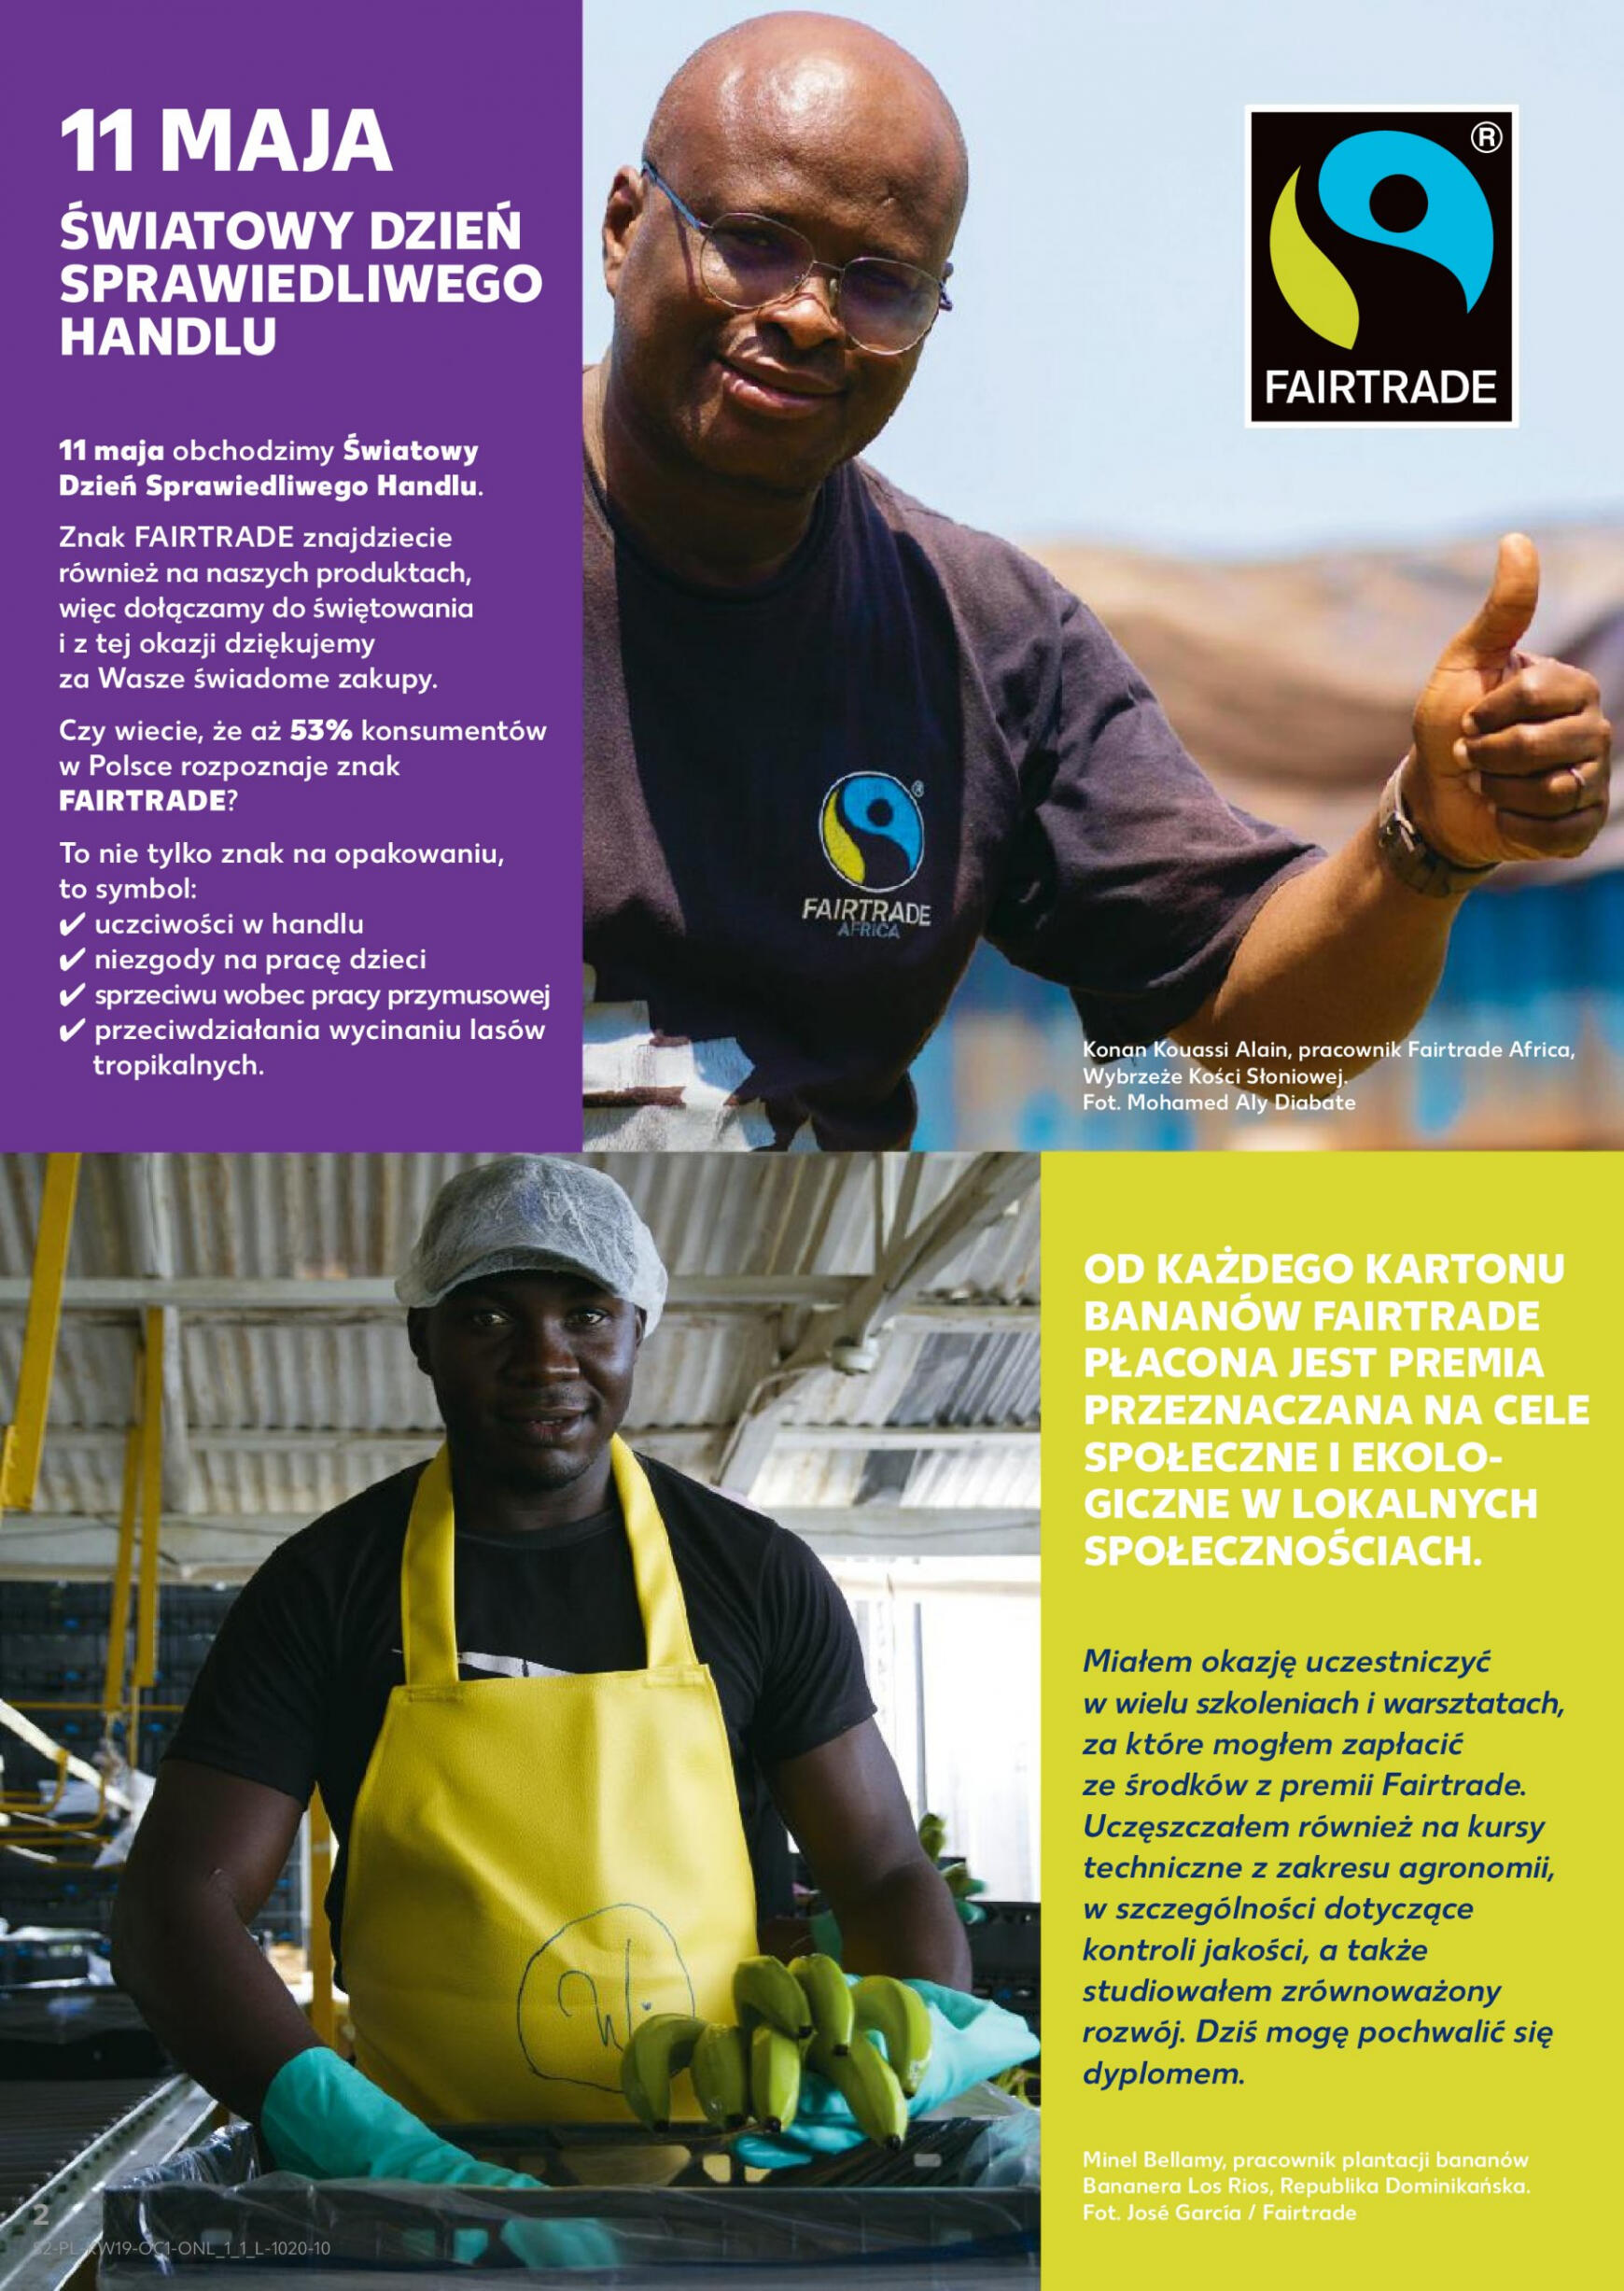 kaufland - Kaufland - Mesiąc Fairtrade gazetka aktualna ważna od 09.05. - 22.05. - page: 2